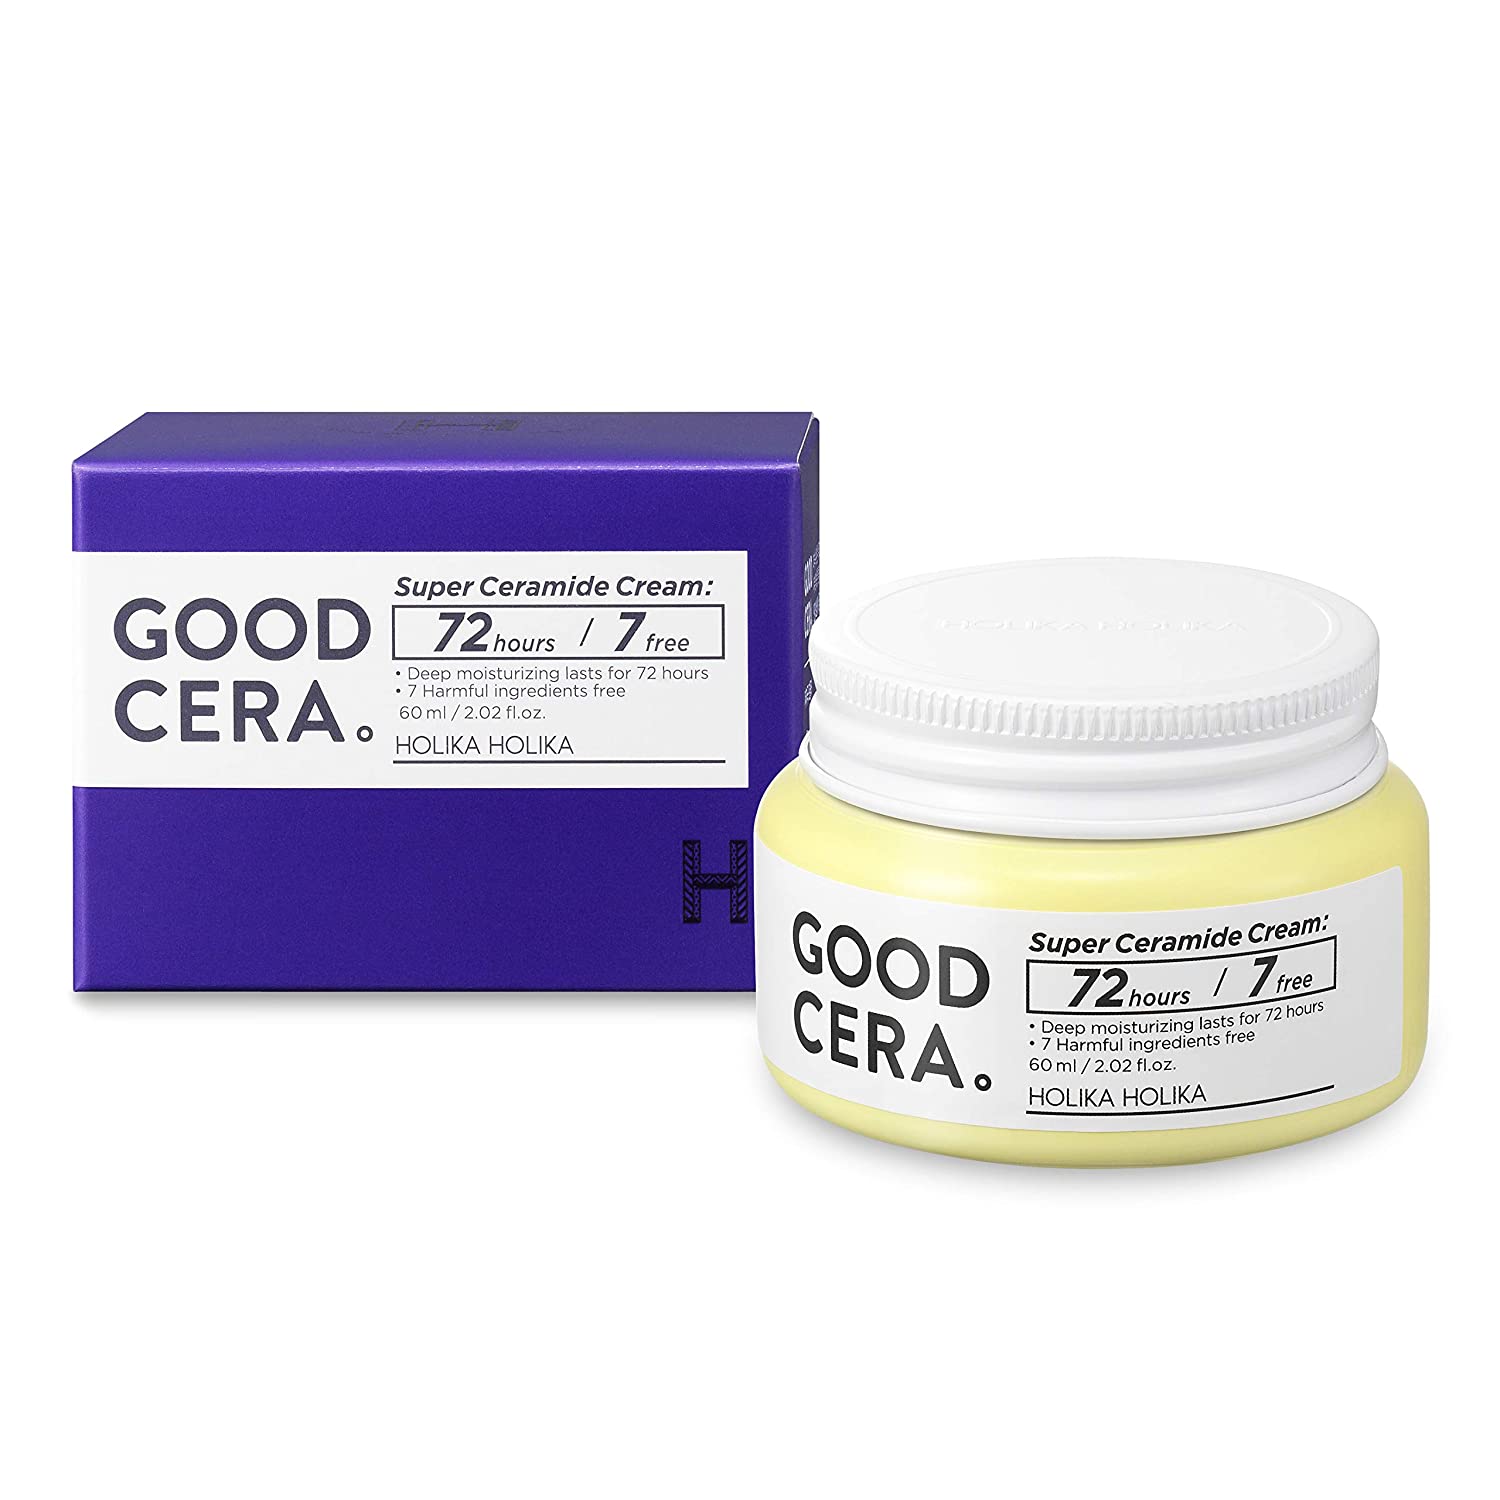 HOLIKA HOLIKA Good Cera Super Ceramide Cream - veido kremas - odoscentras.lt